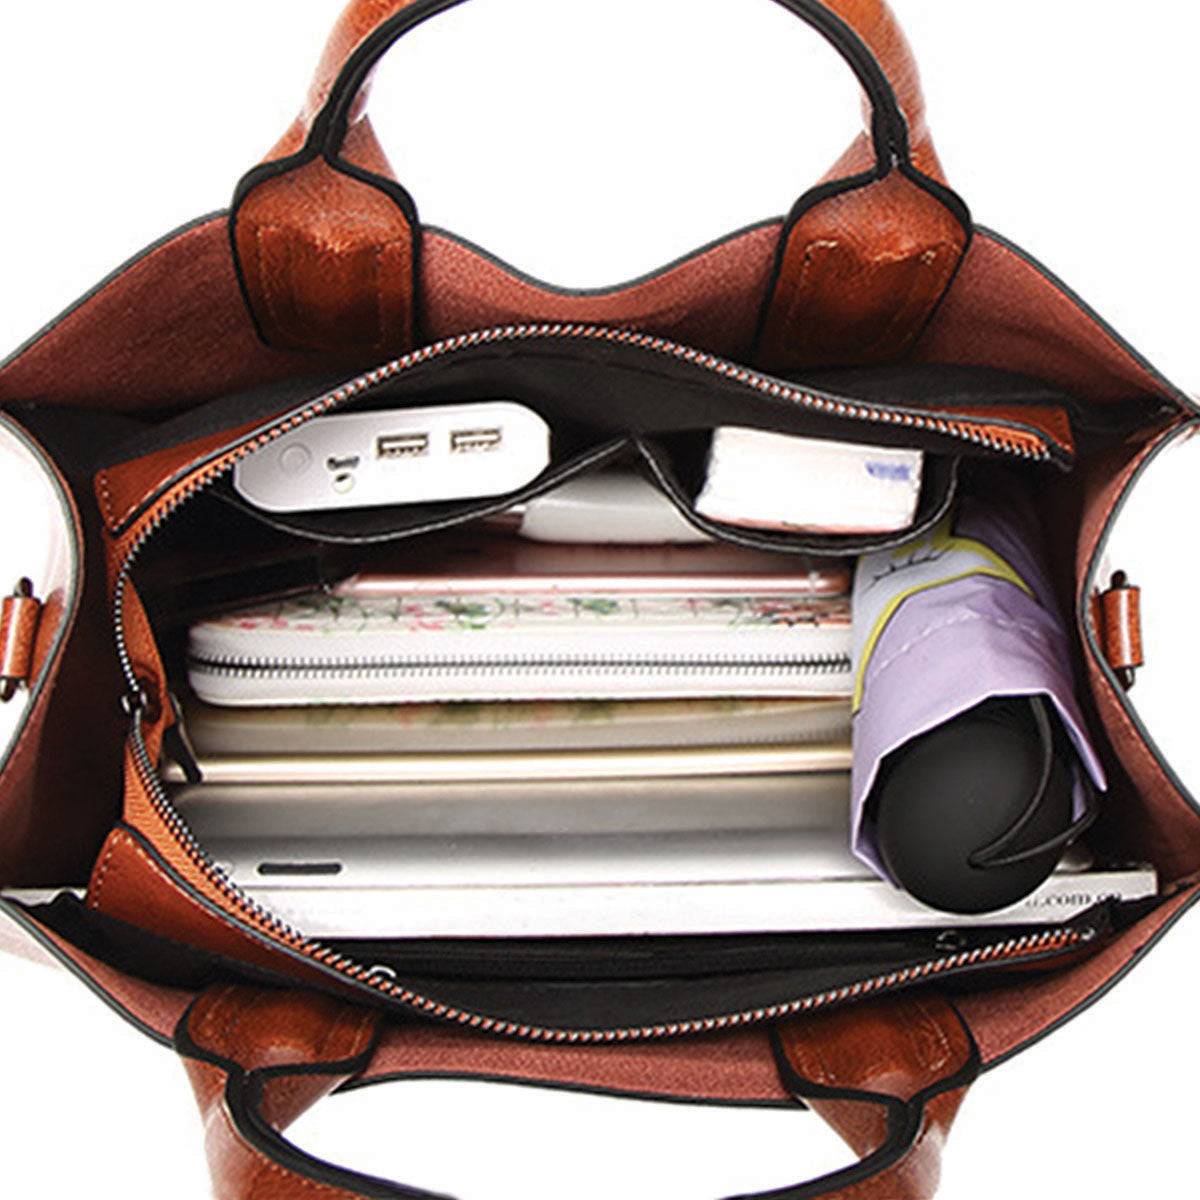 Your Best Companion - Miniature Pinscher Luxury Handbag V3